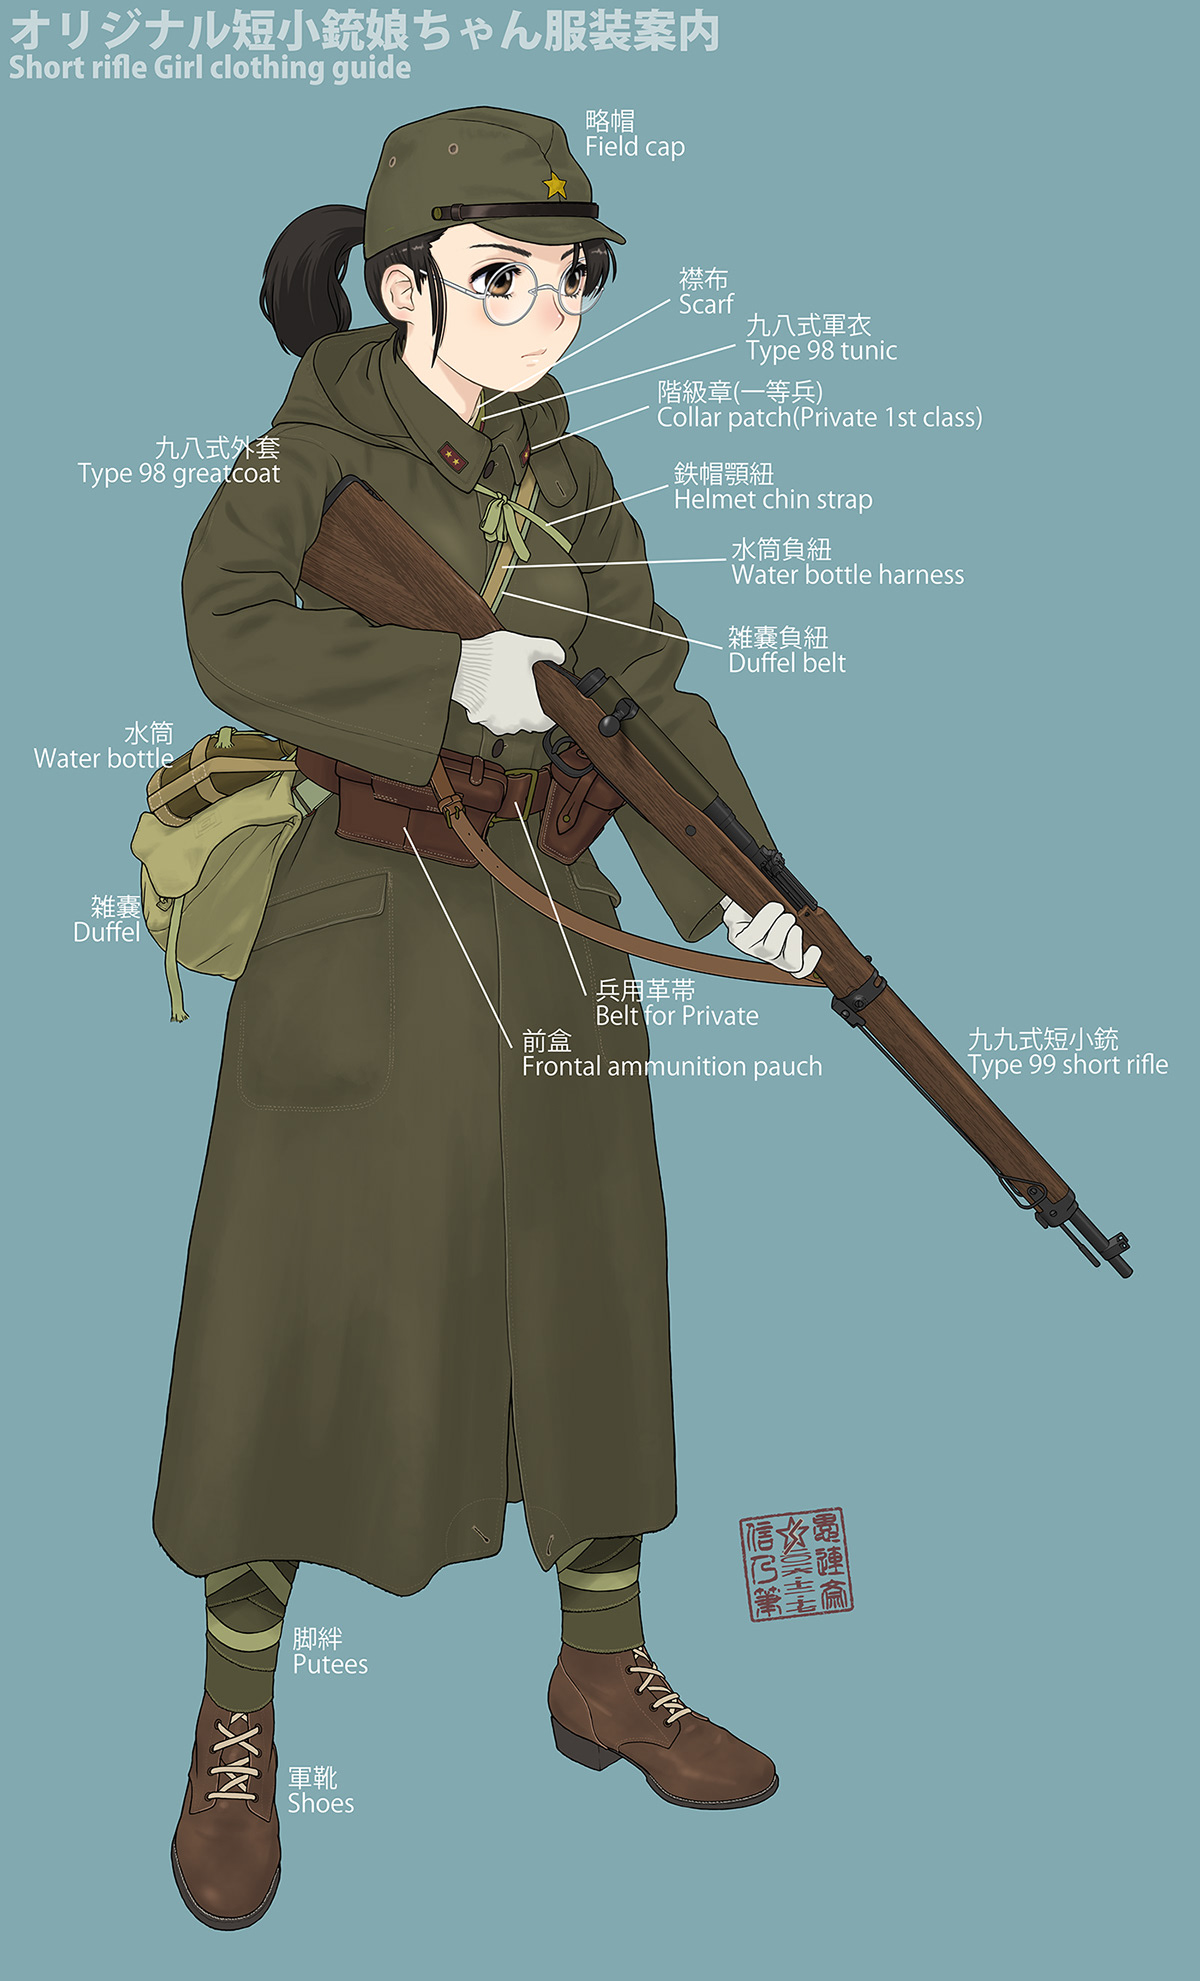 Military army uniform history WWII